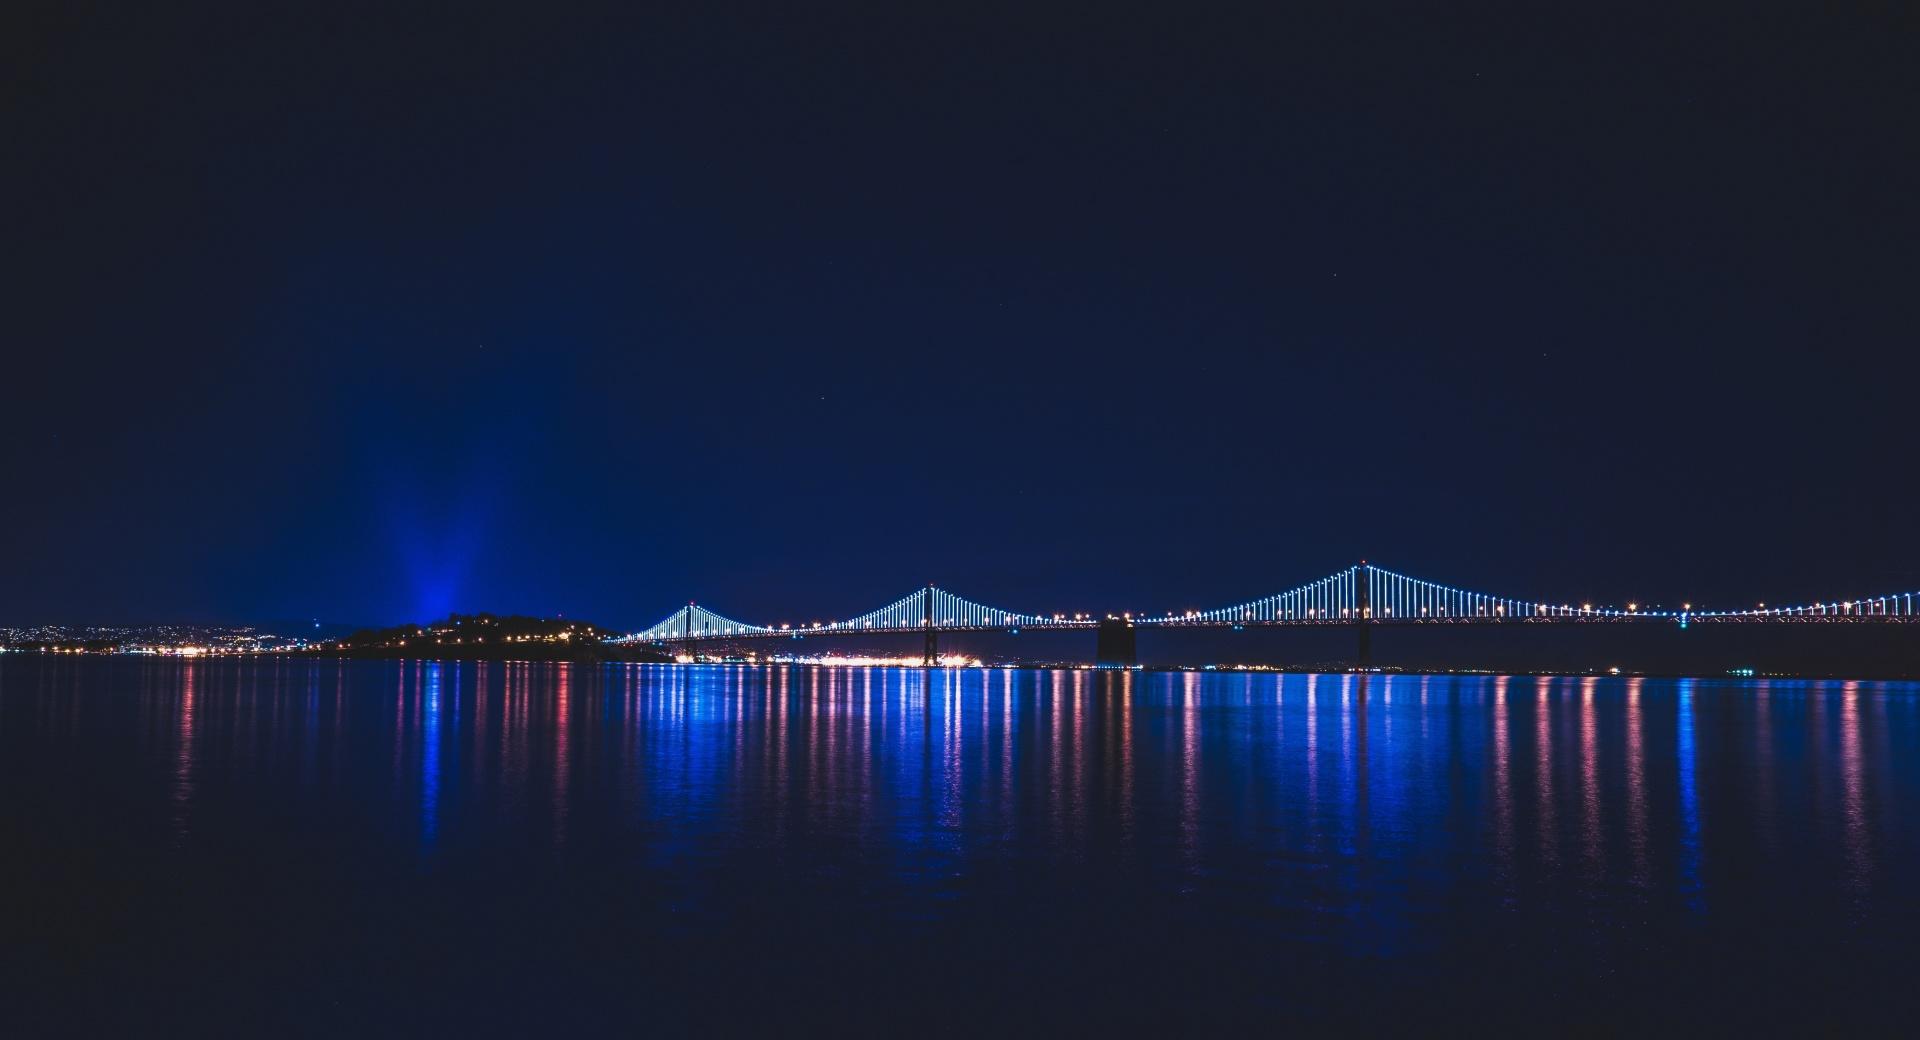 Bridge, Night at 1280 x 960 size wallpapers HD quality